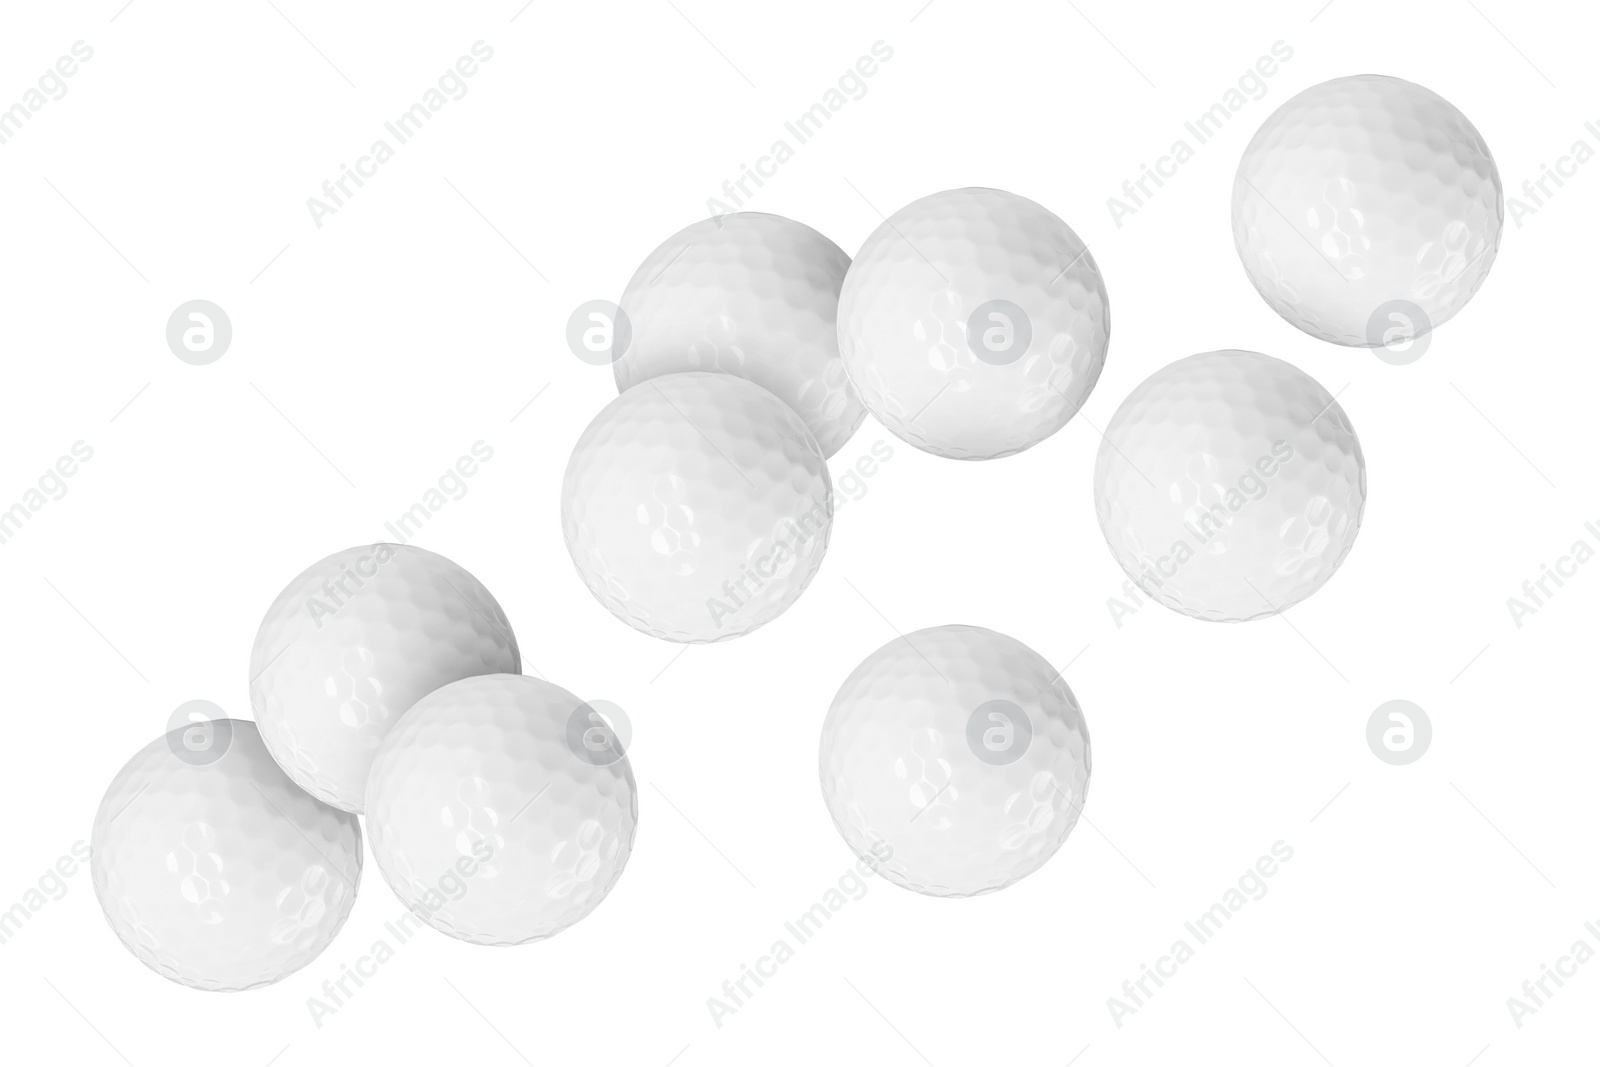 Image of Many golf balls flying on white background